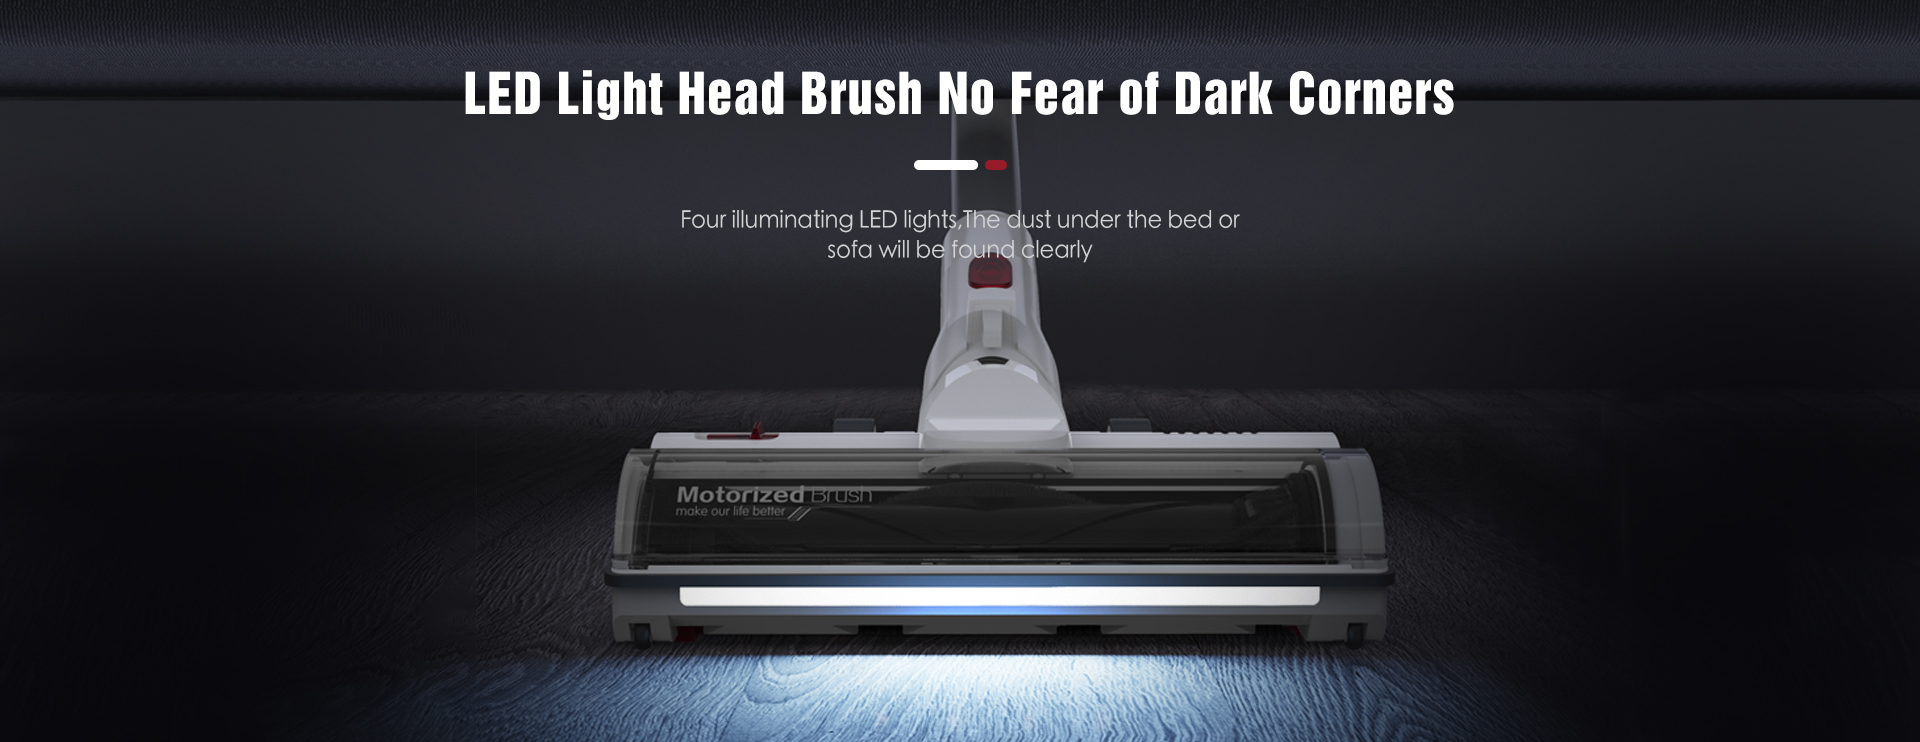 LED_Light_Head_Brush_No_Fear_of_Dark_Corners